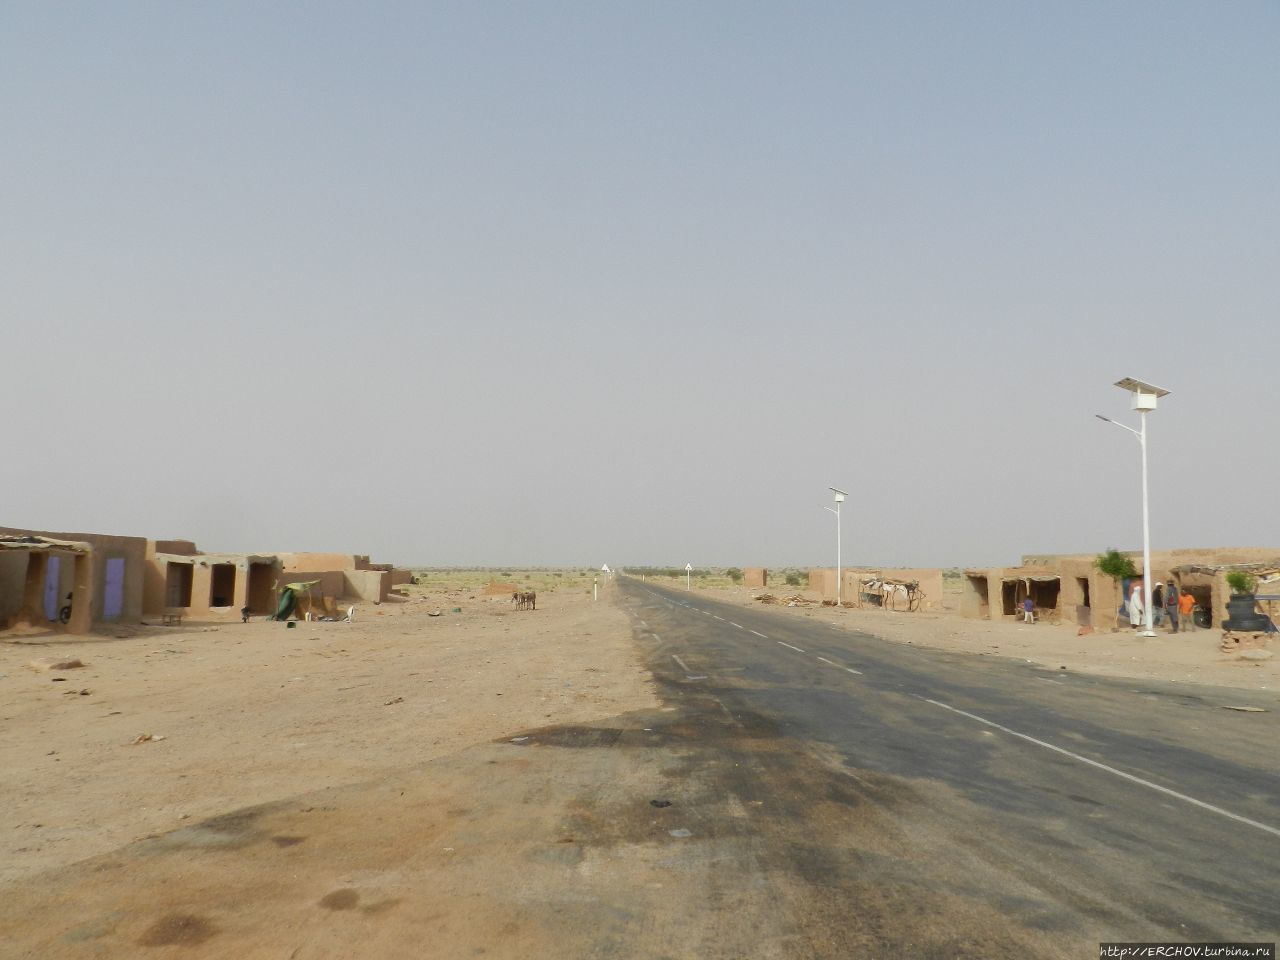 Нигер. Ч — 15. Скачки. Дорога в Агадес Департамент Агадес, Нигер